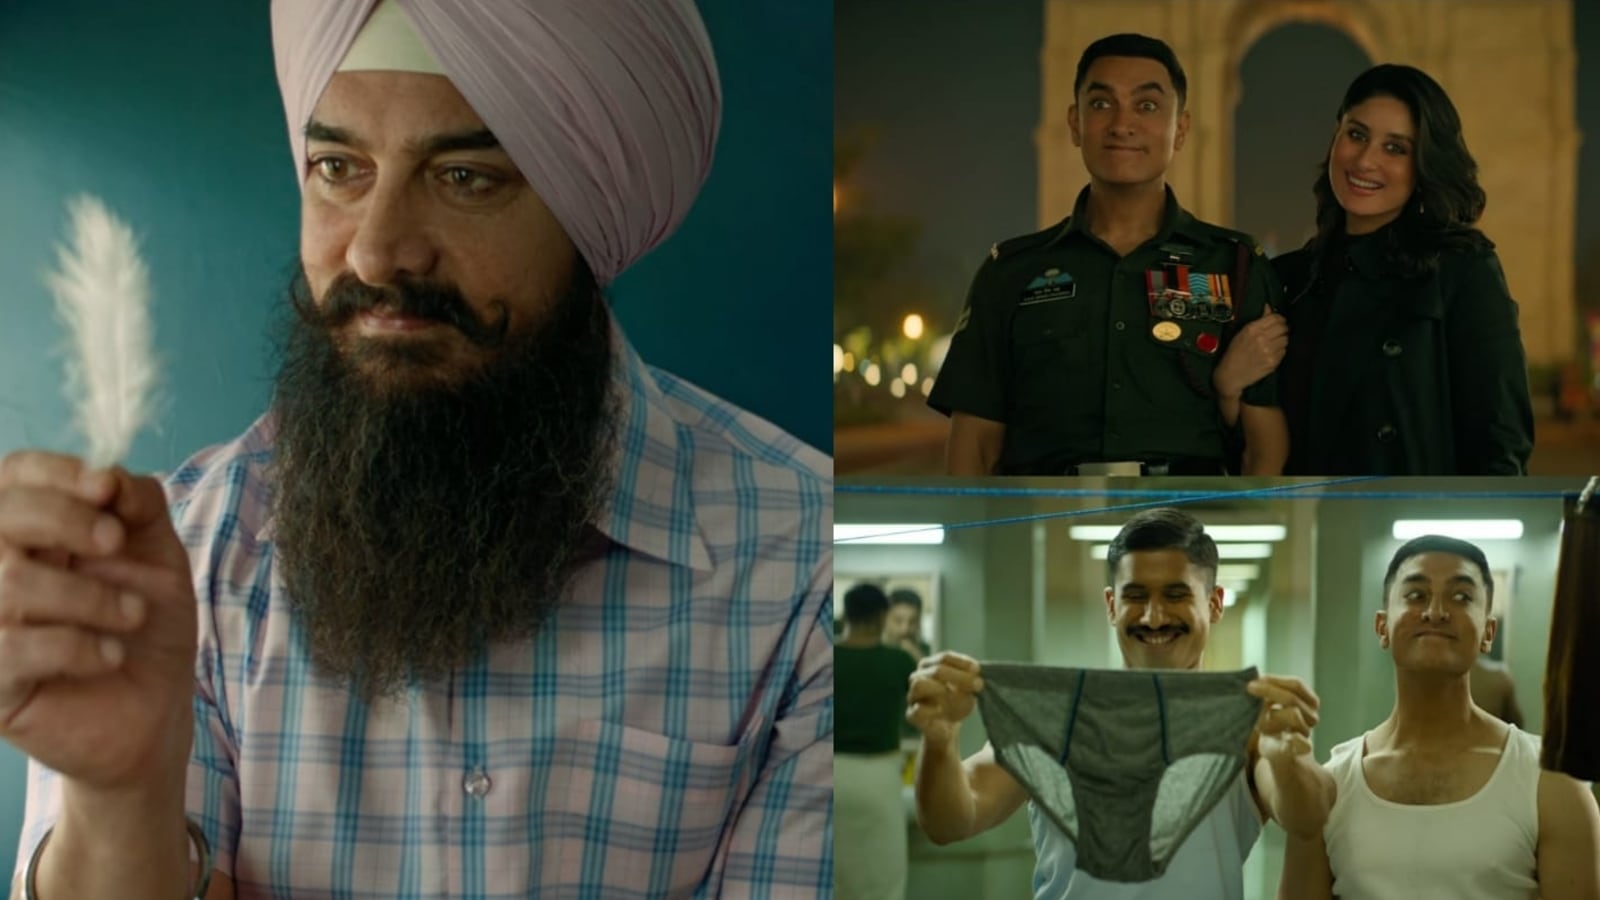 Laal Singh Chaddha trailer: Aamir Khan is a lovable jack-of-all